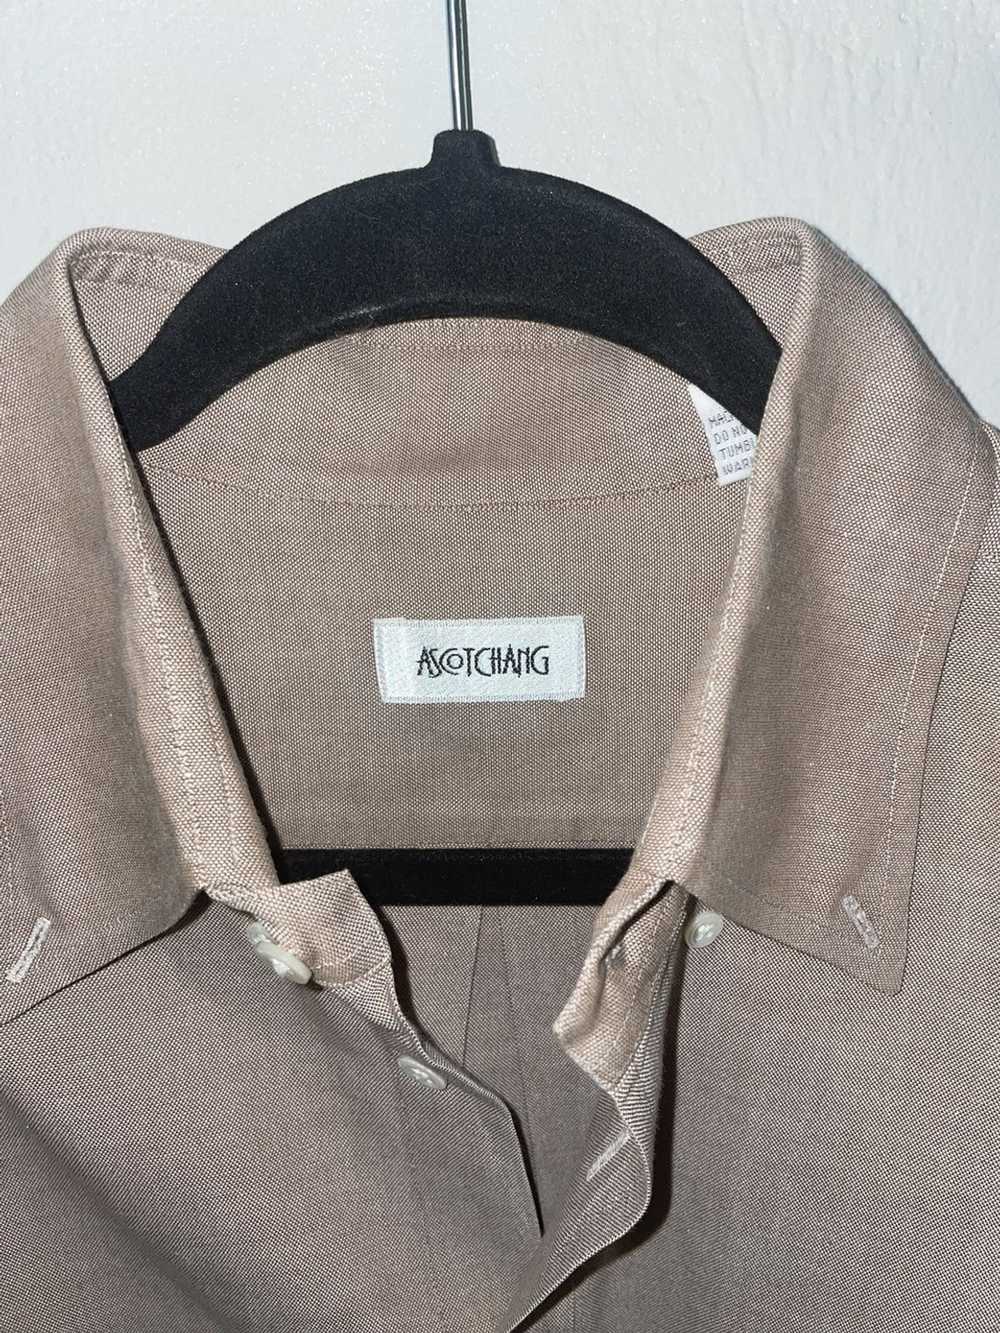 Ascot Chang Ascot Chang Button Up Shirt Made in H… - image 2